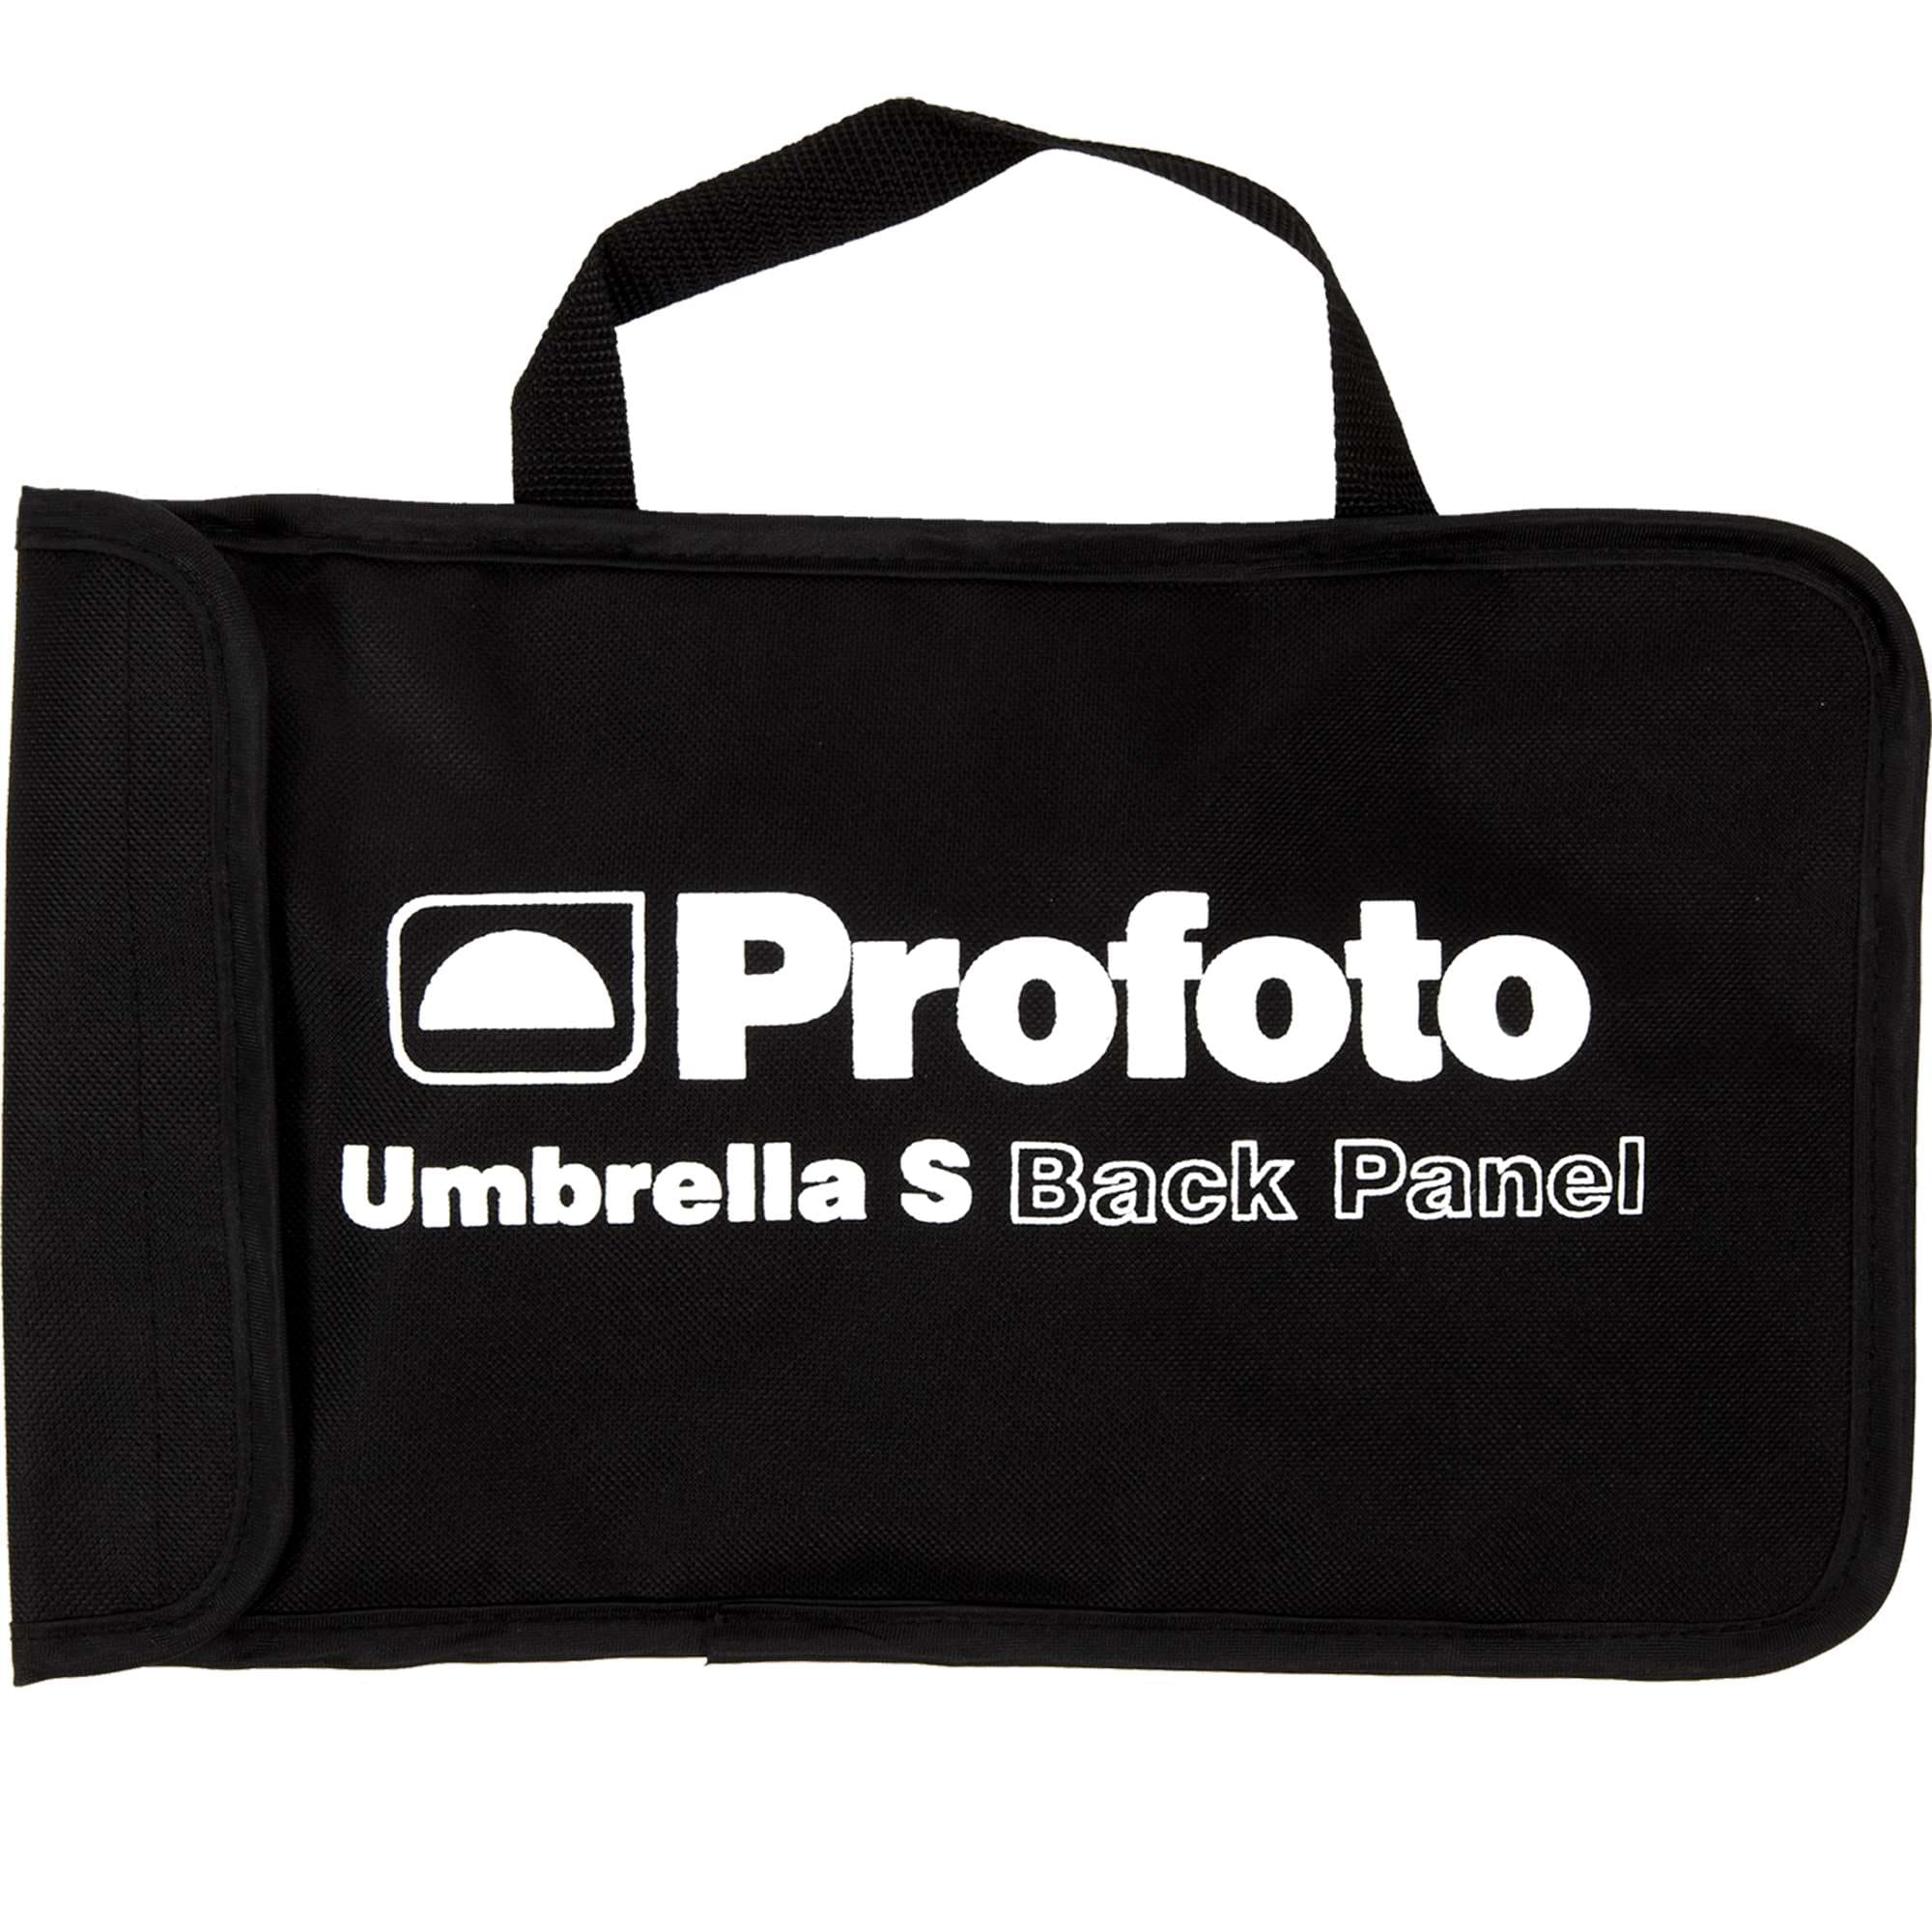 Profoto Umbrella S Back Panel